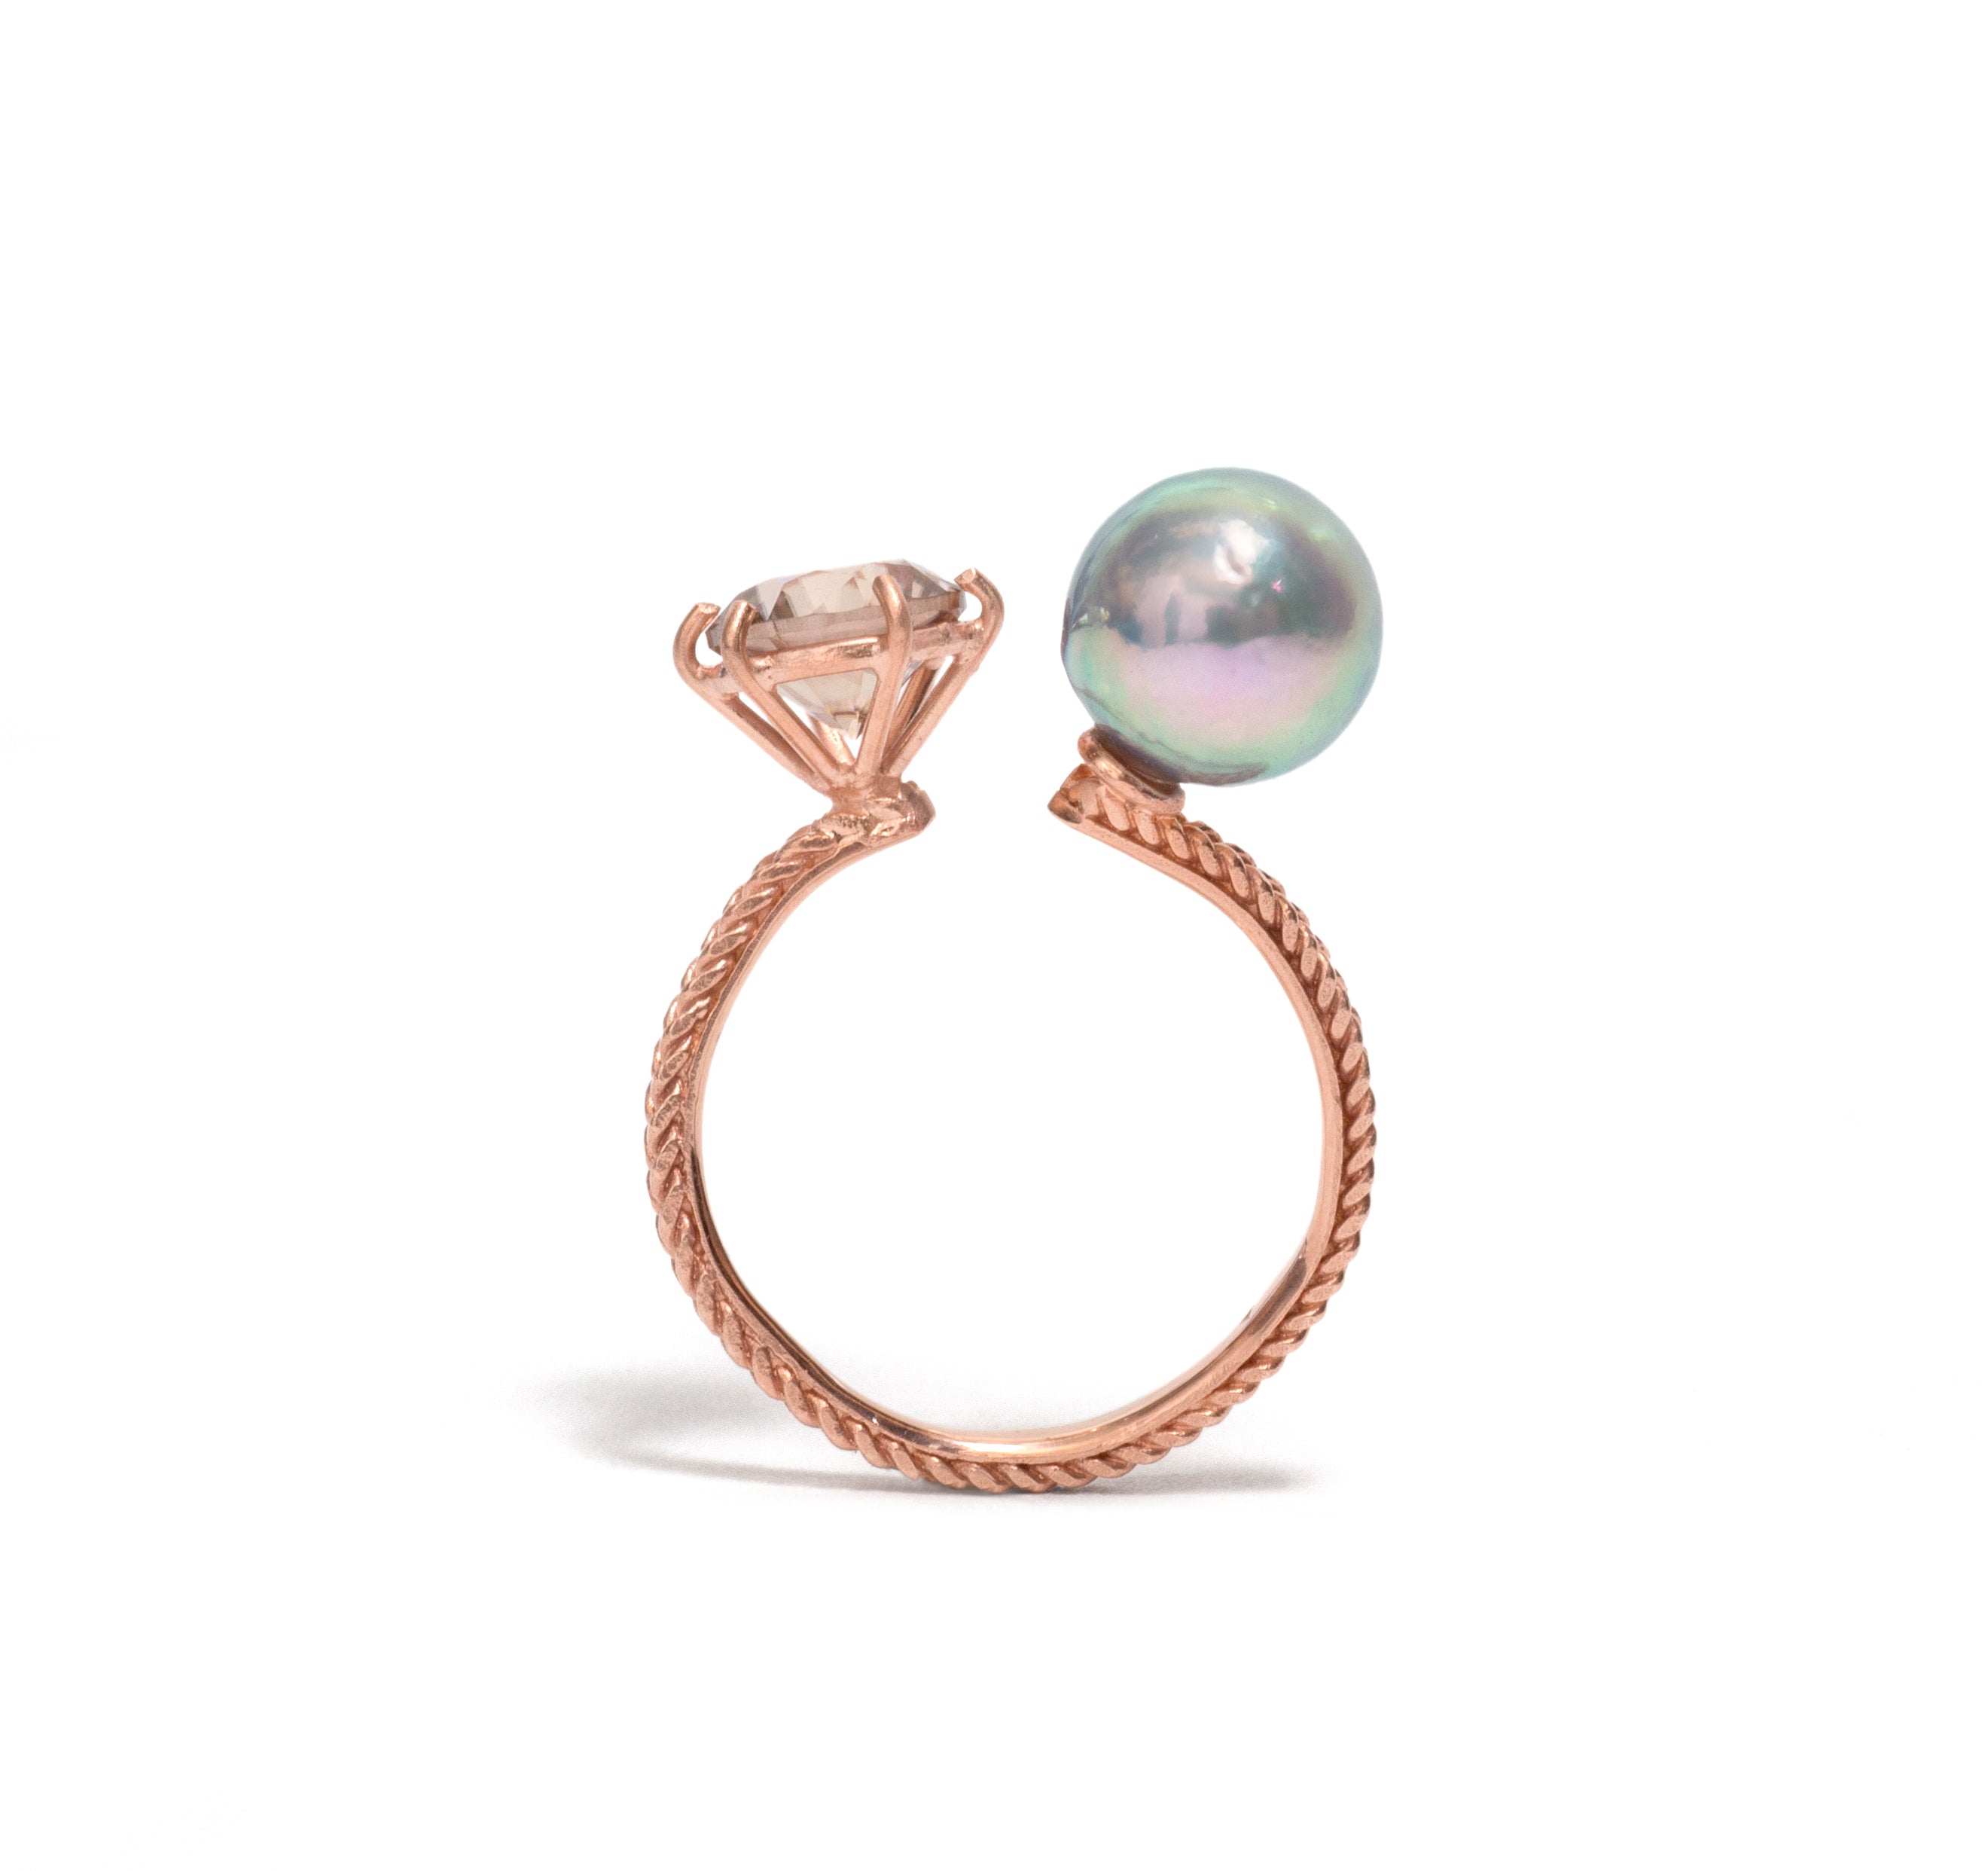 nina oikawa jewellery jeweller jewels pearls ring pearl earring pieces of eight